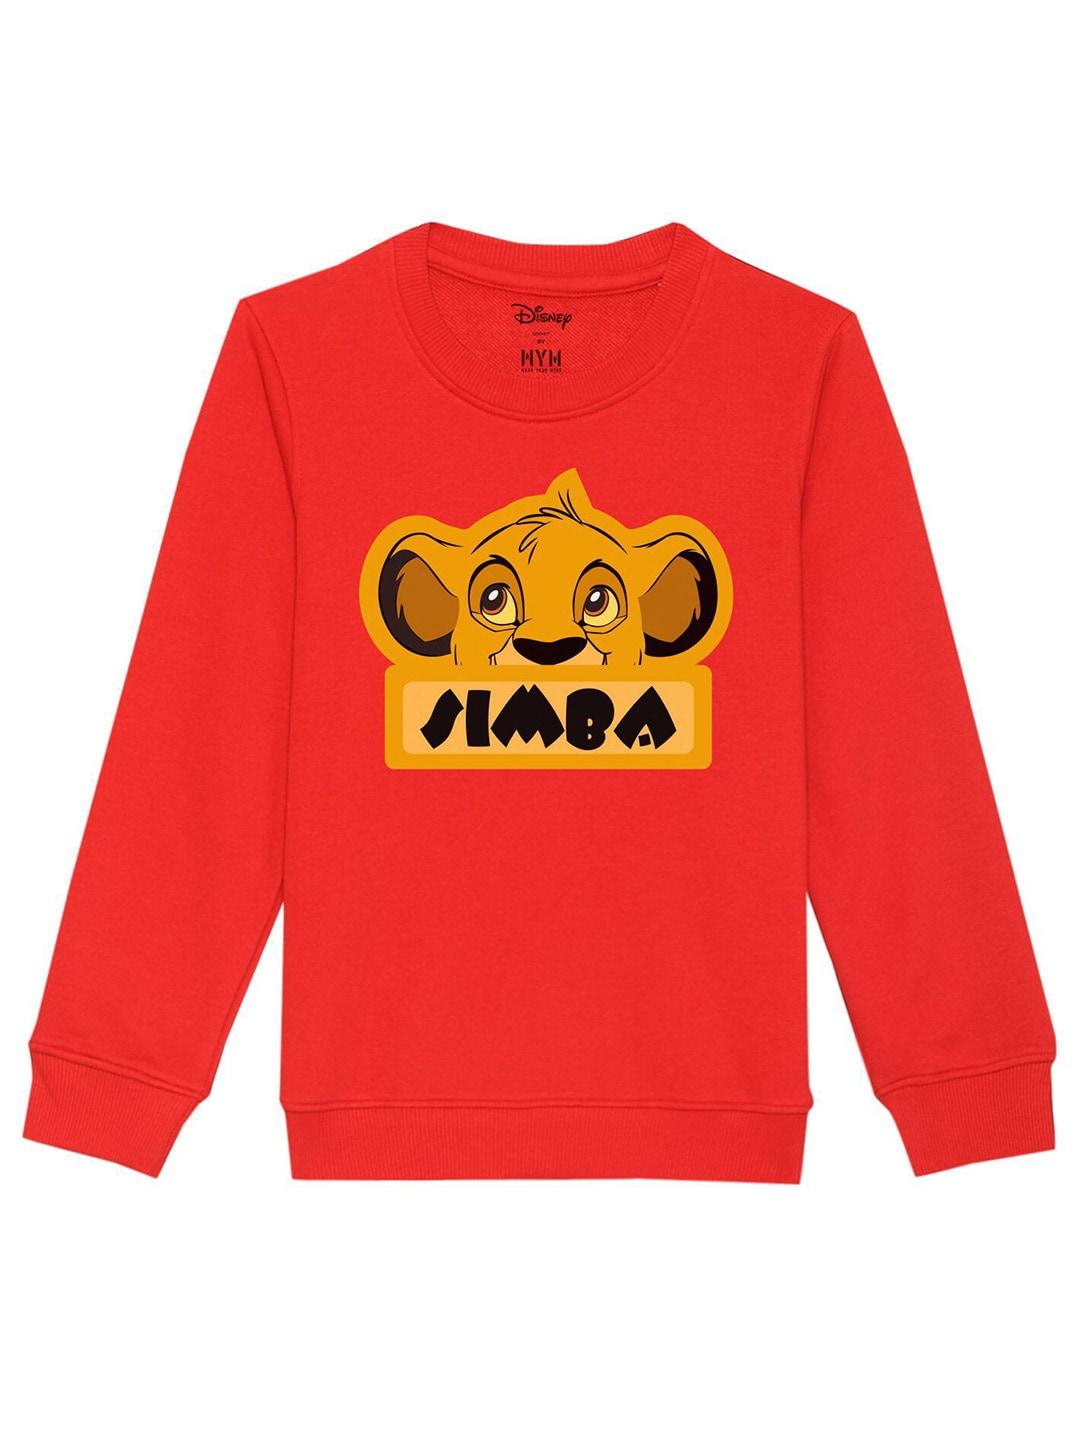 disney-by-wear-your-mind-kids-red-printed-sweatshirt